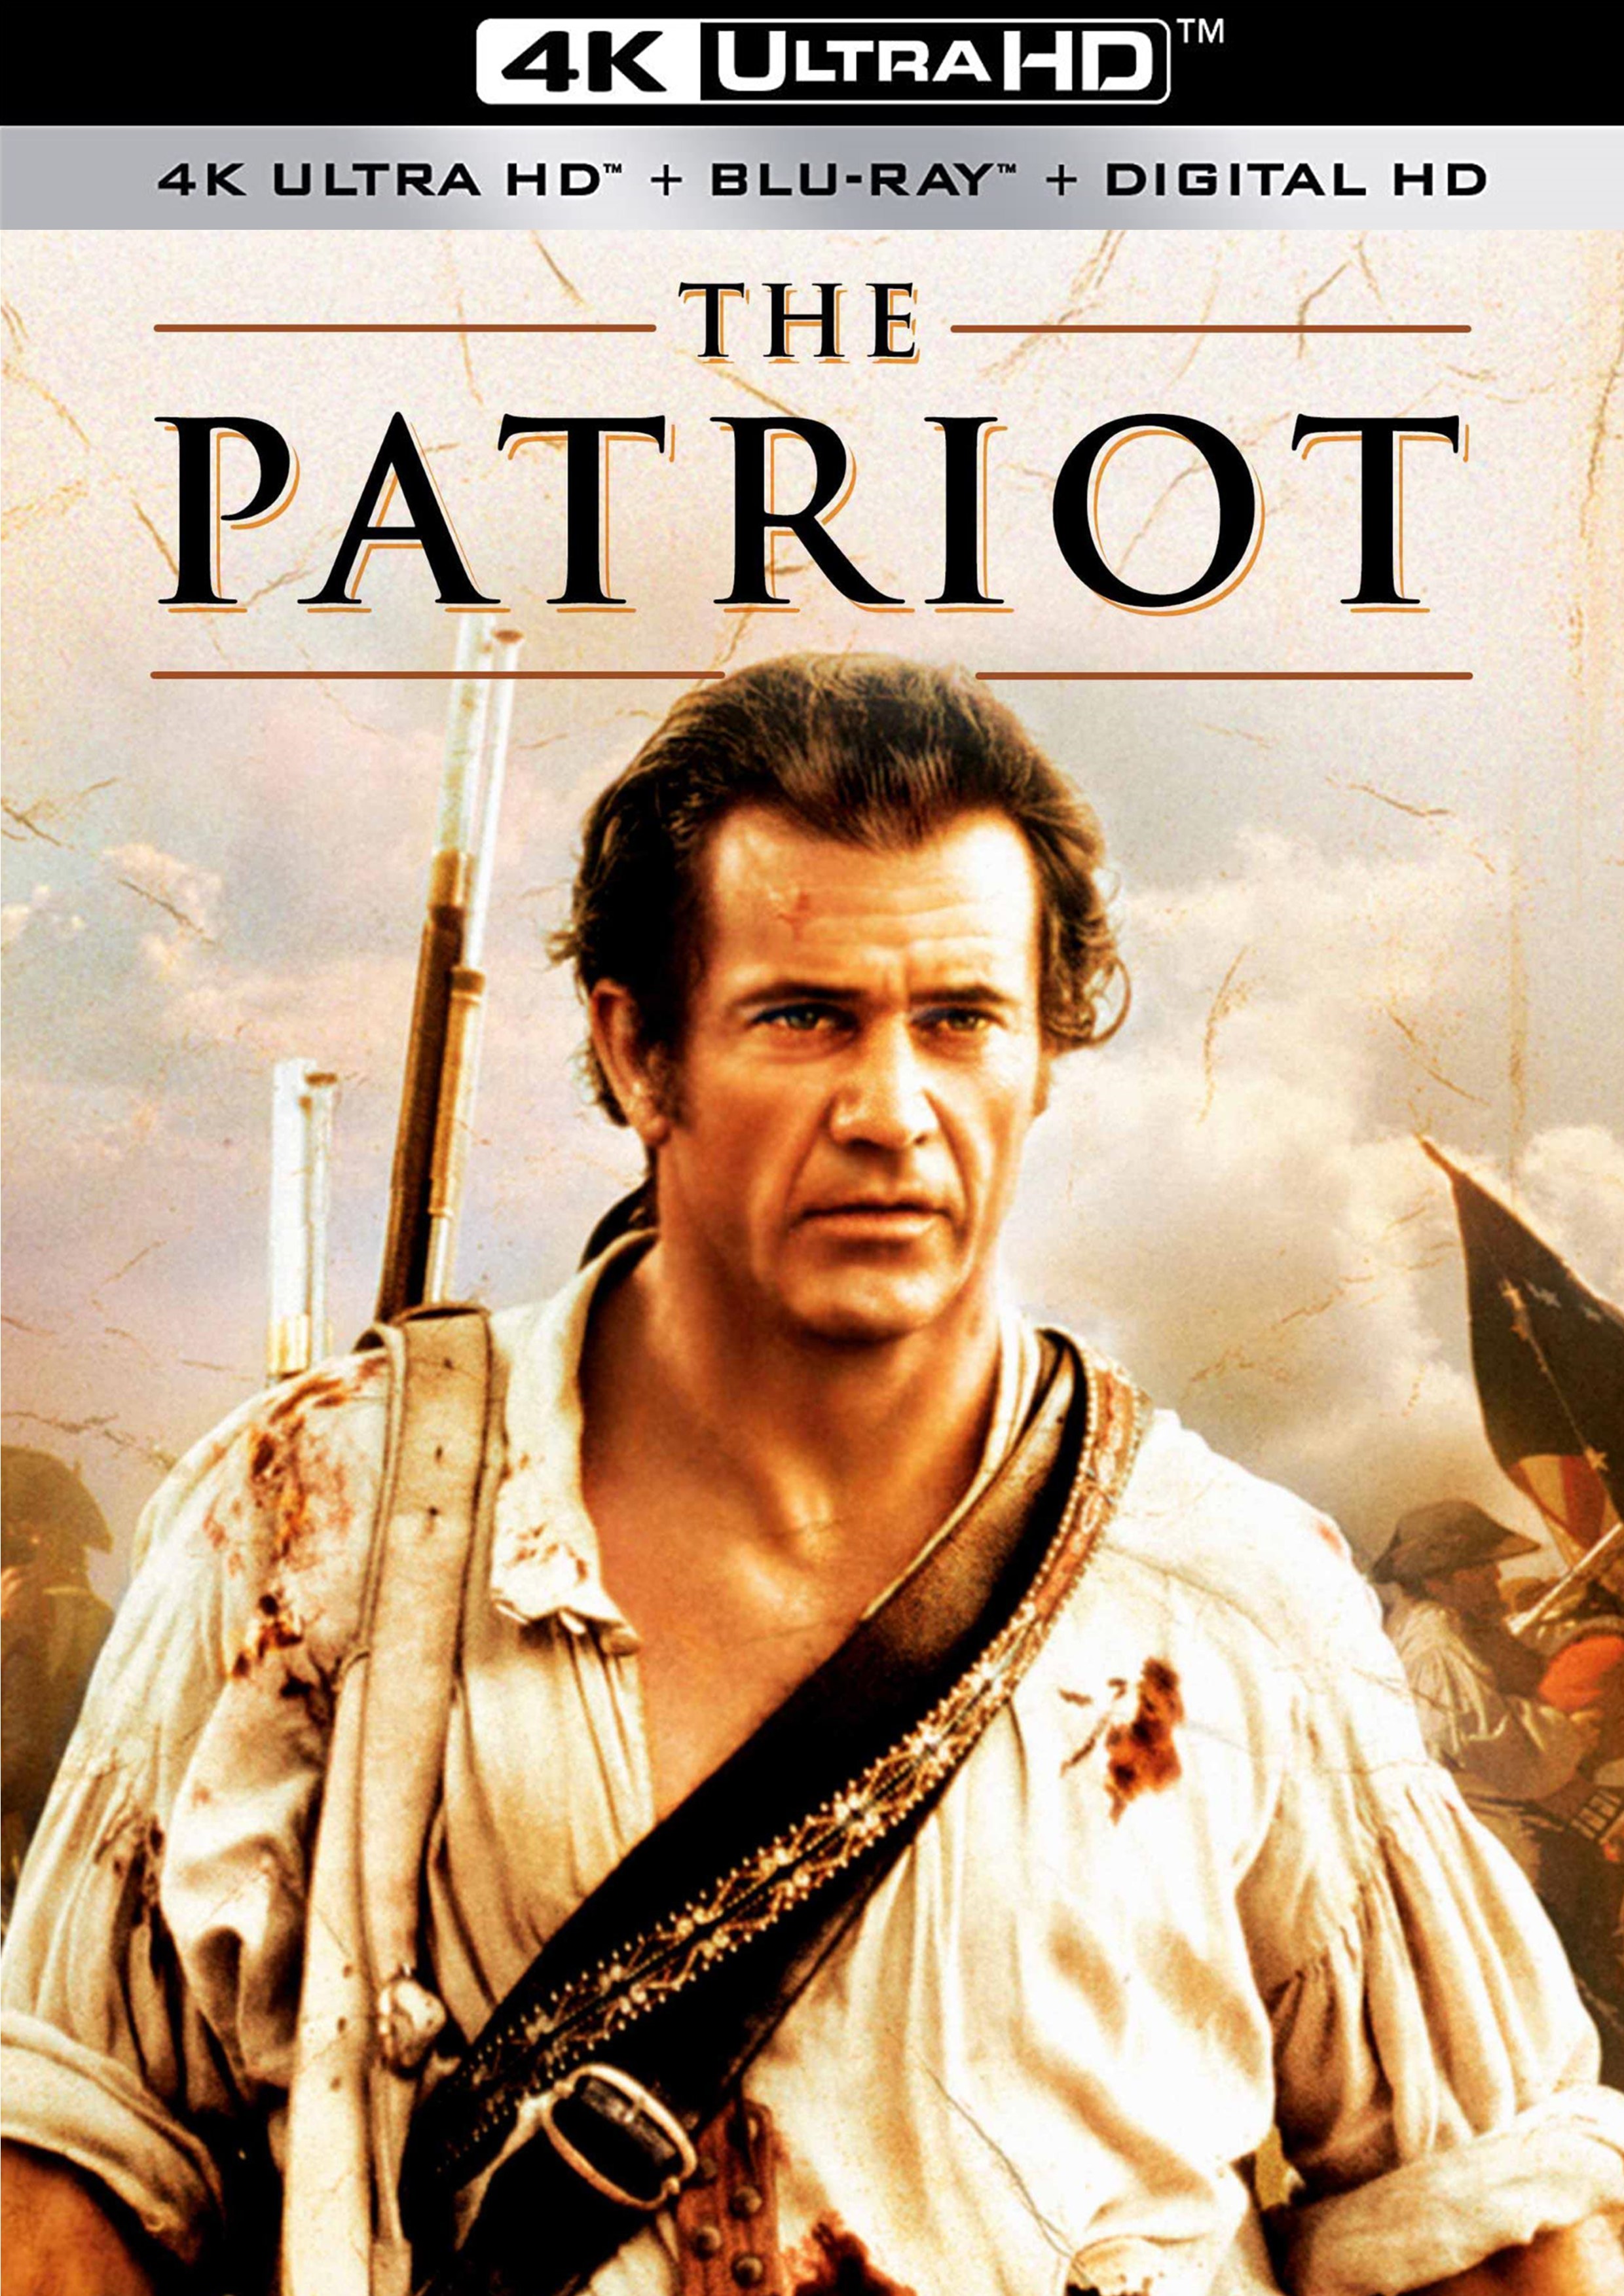 Stiahni si UHD Filmy Patriot / The Patriot (2000)(CZ/EN)(2160p 4K BDRemux)(HDR10) = CSFD 70%